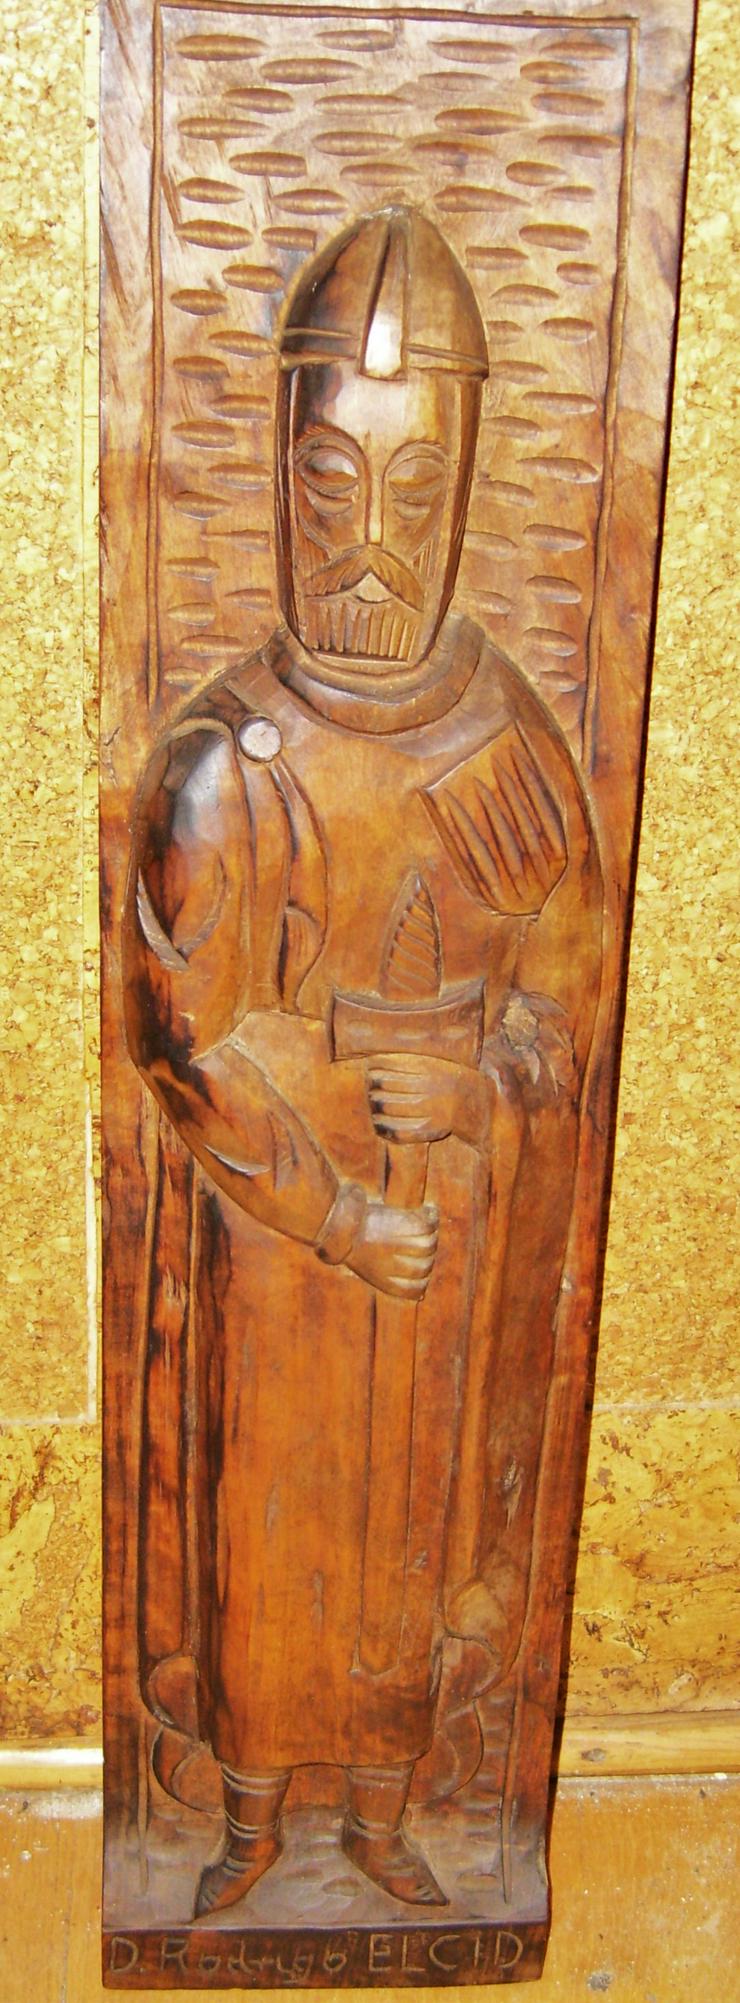 Bild 1: holz relief bild  El Cid